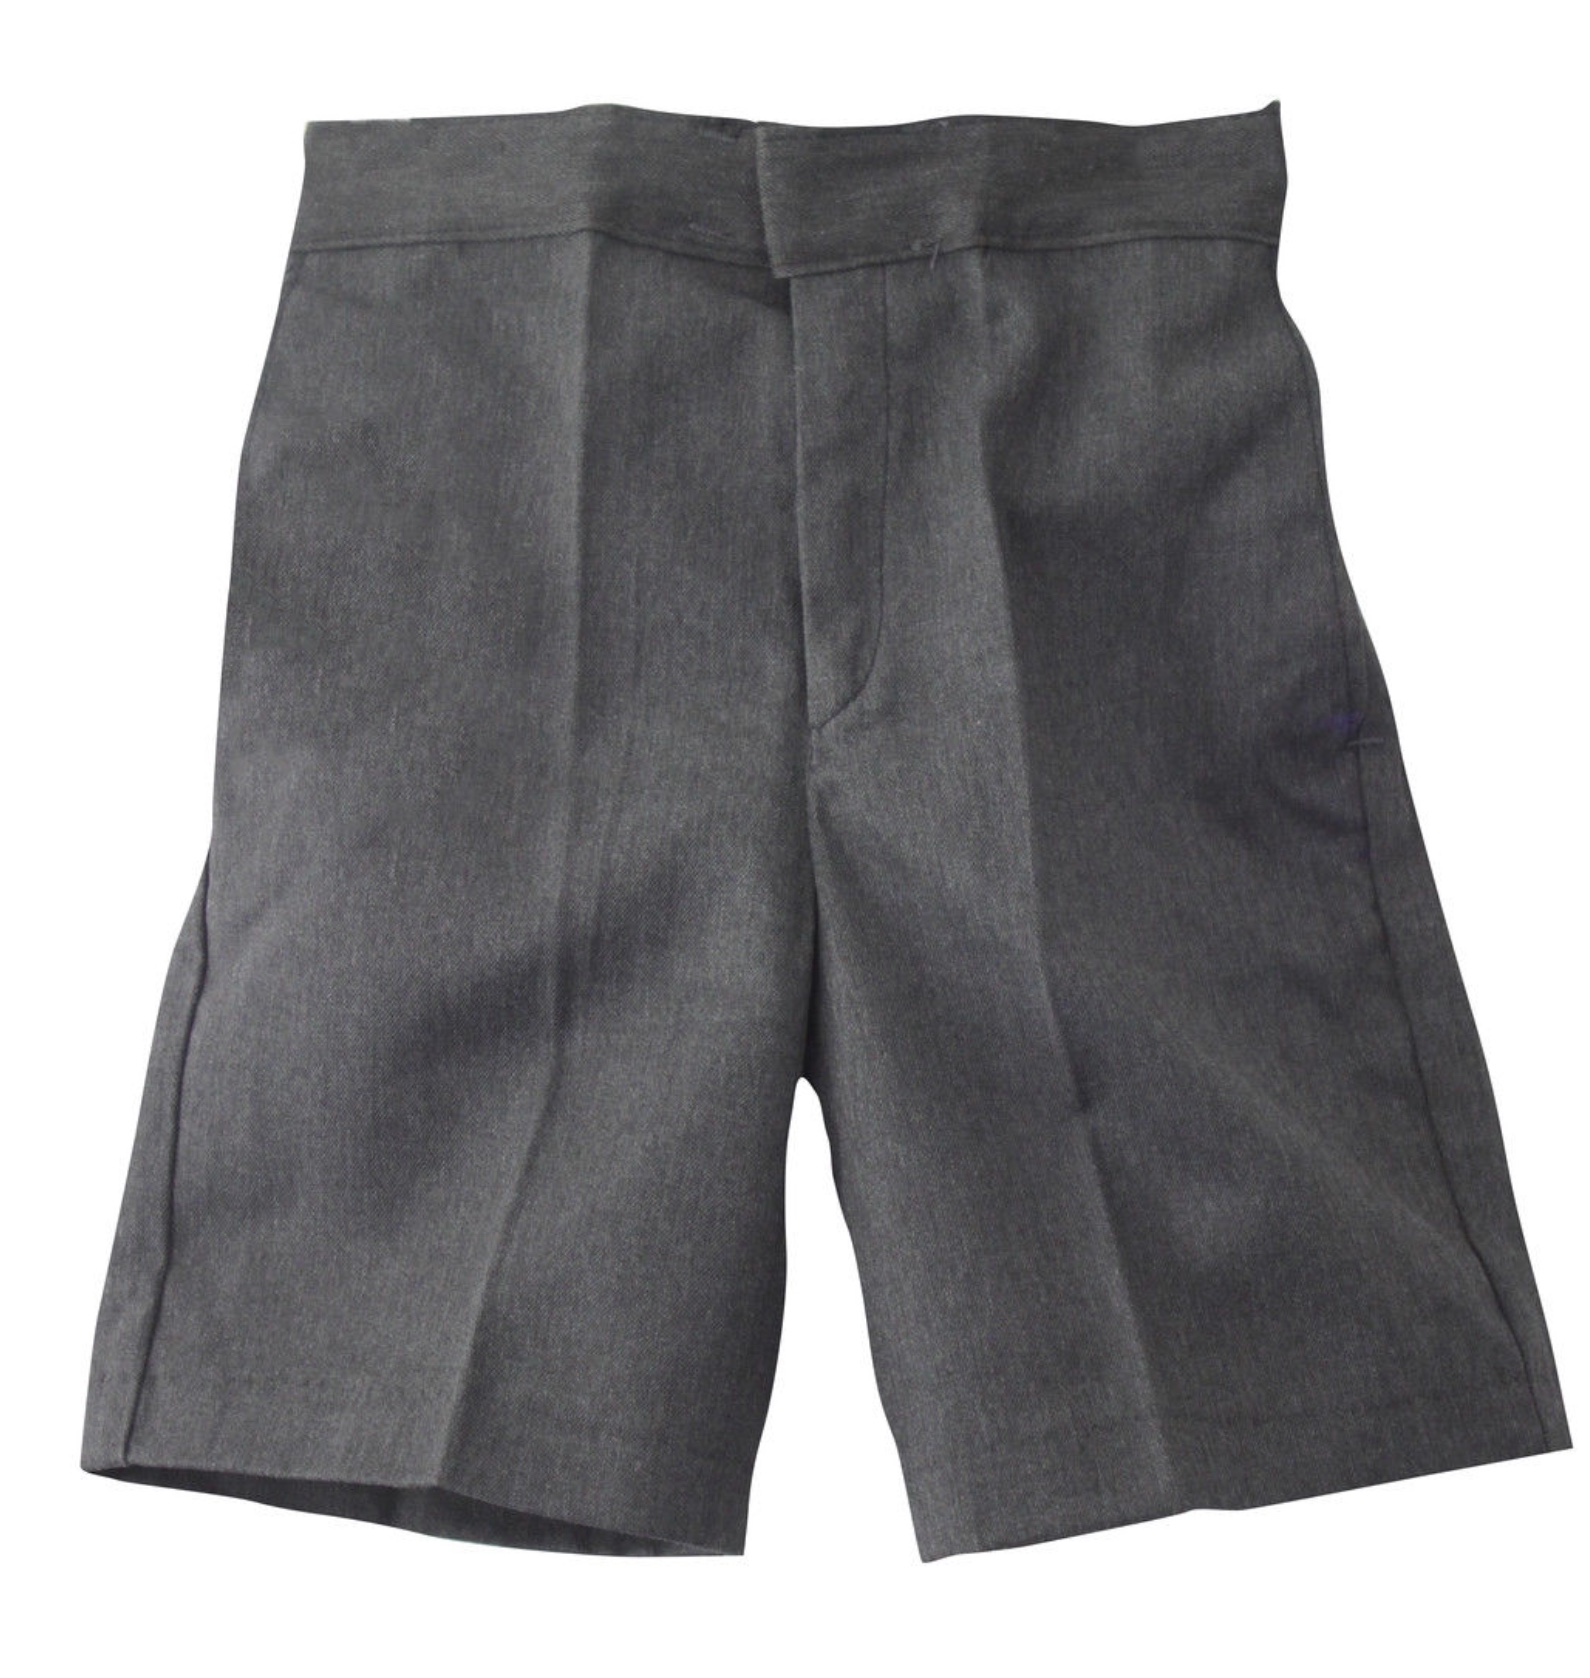 Boys' Dark Grey Shorts, Flat Front, Adjustable Waist, Zip Fly, Side and Back Pockets 10-11 Y